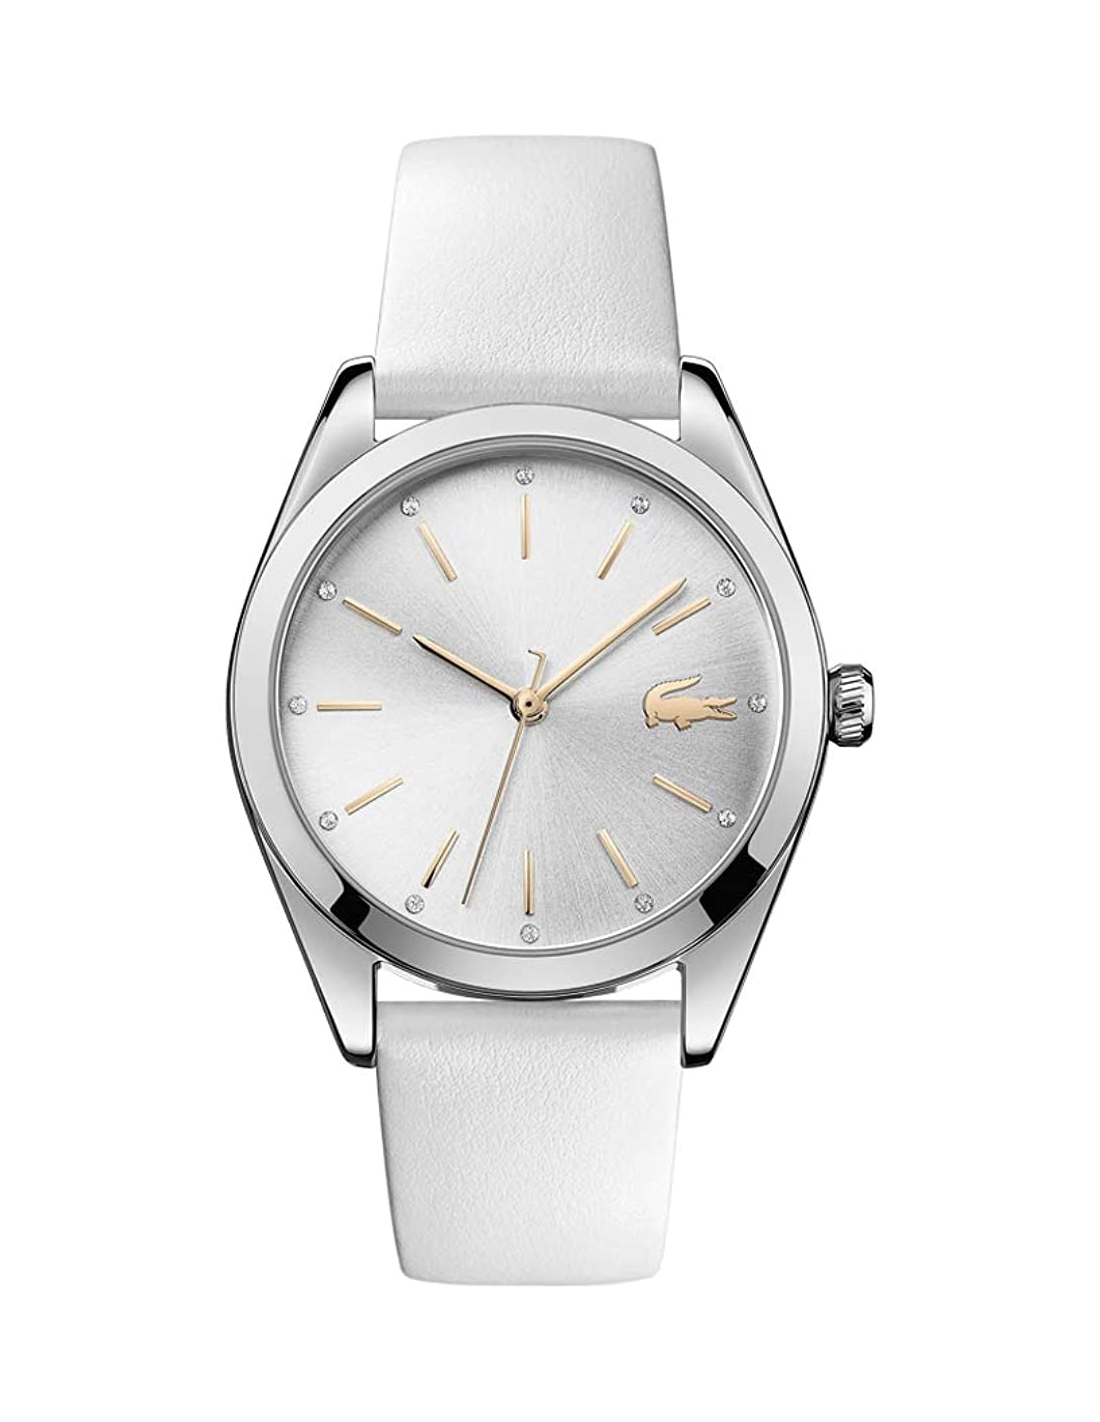 lacoste watch original price